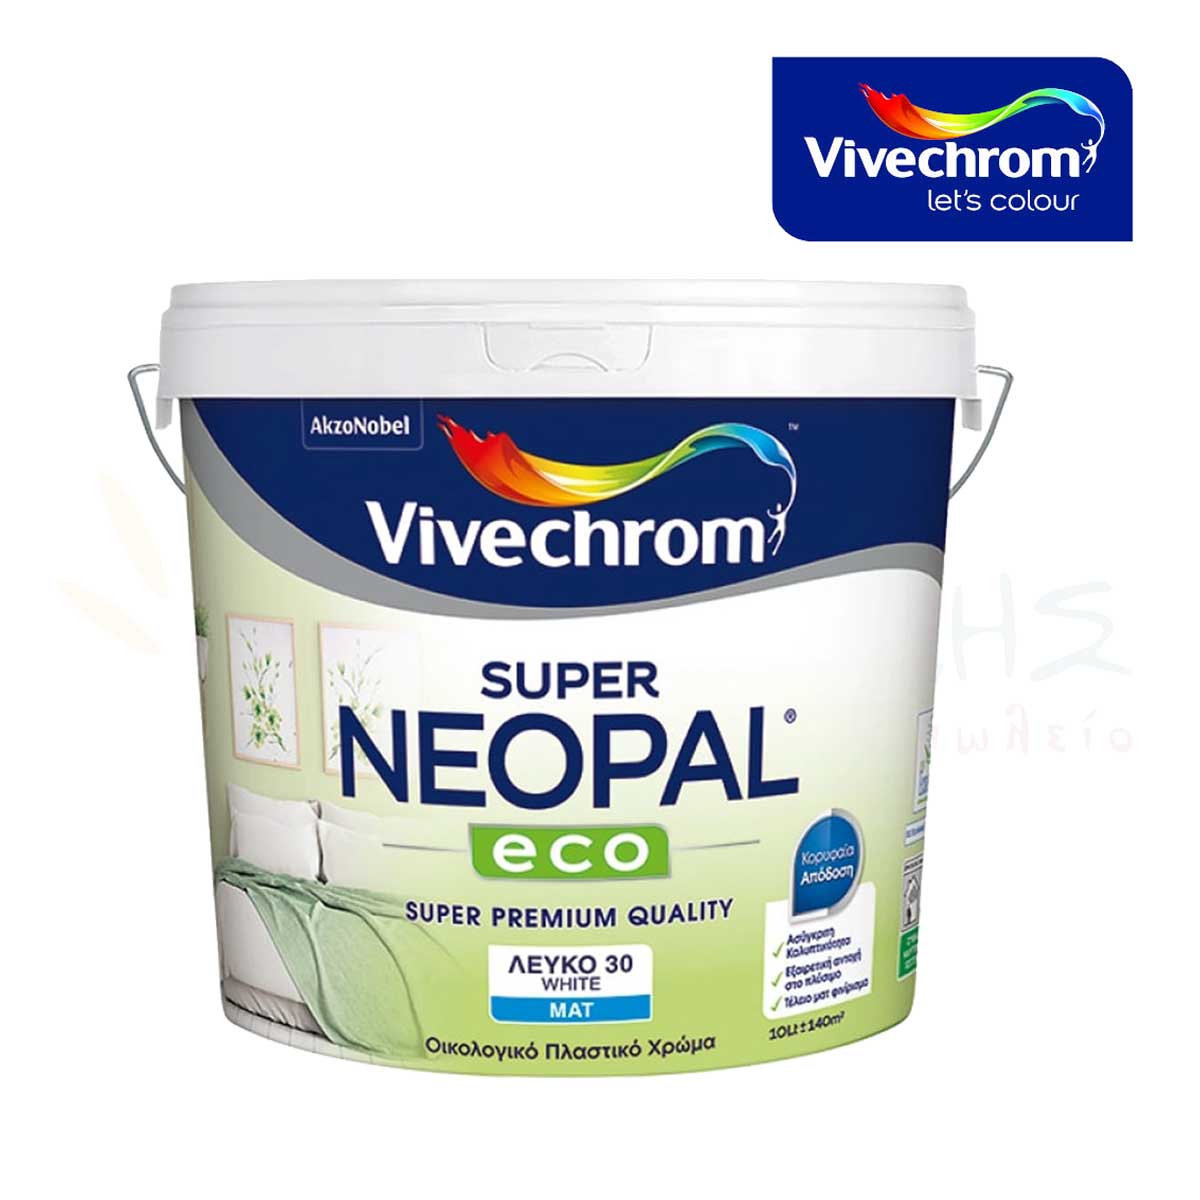 Super Neopal eco - Vivechrom